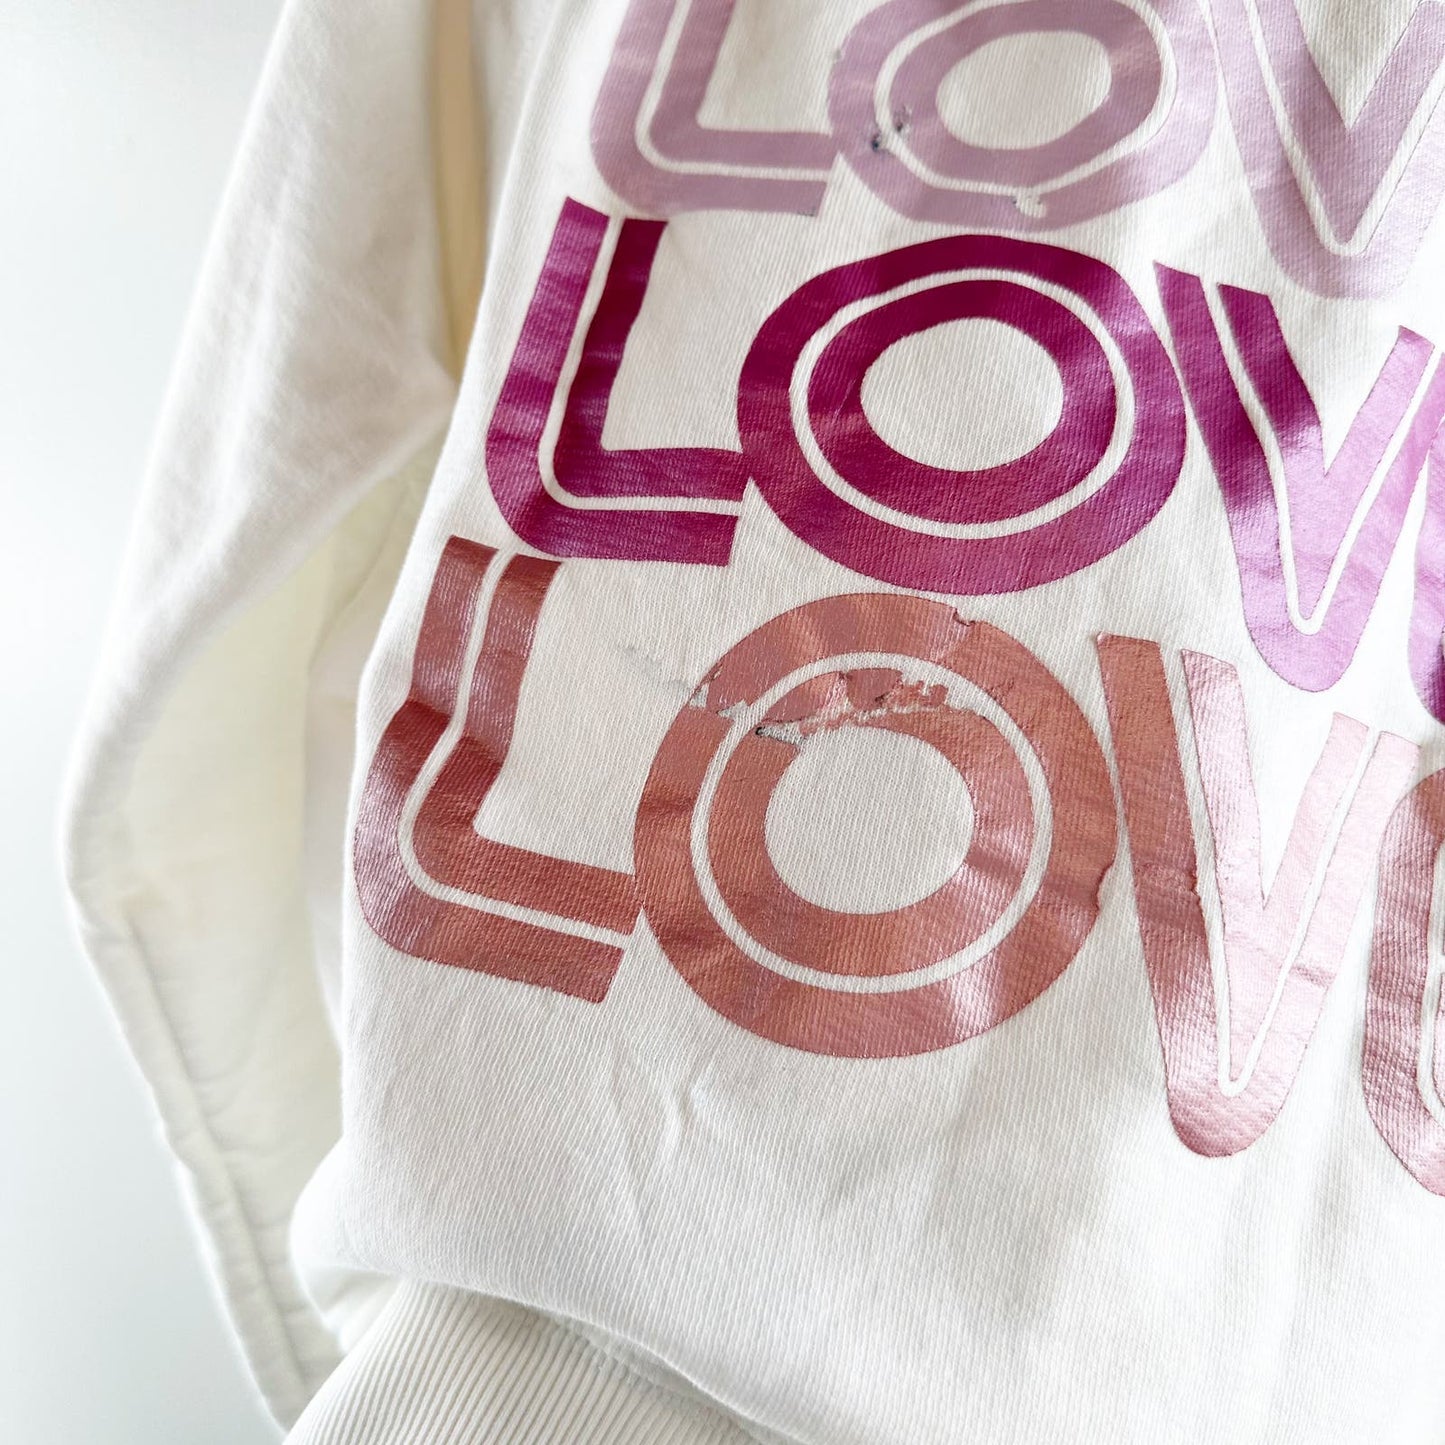 Spiritual Gangster Crewneck Pullover Cotton Love Graphic Sweatshirt White Small